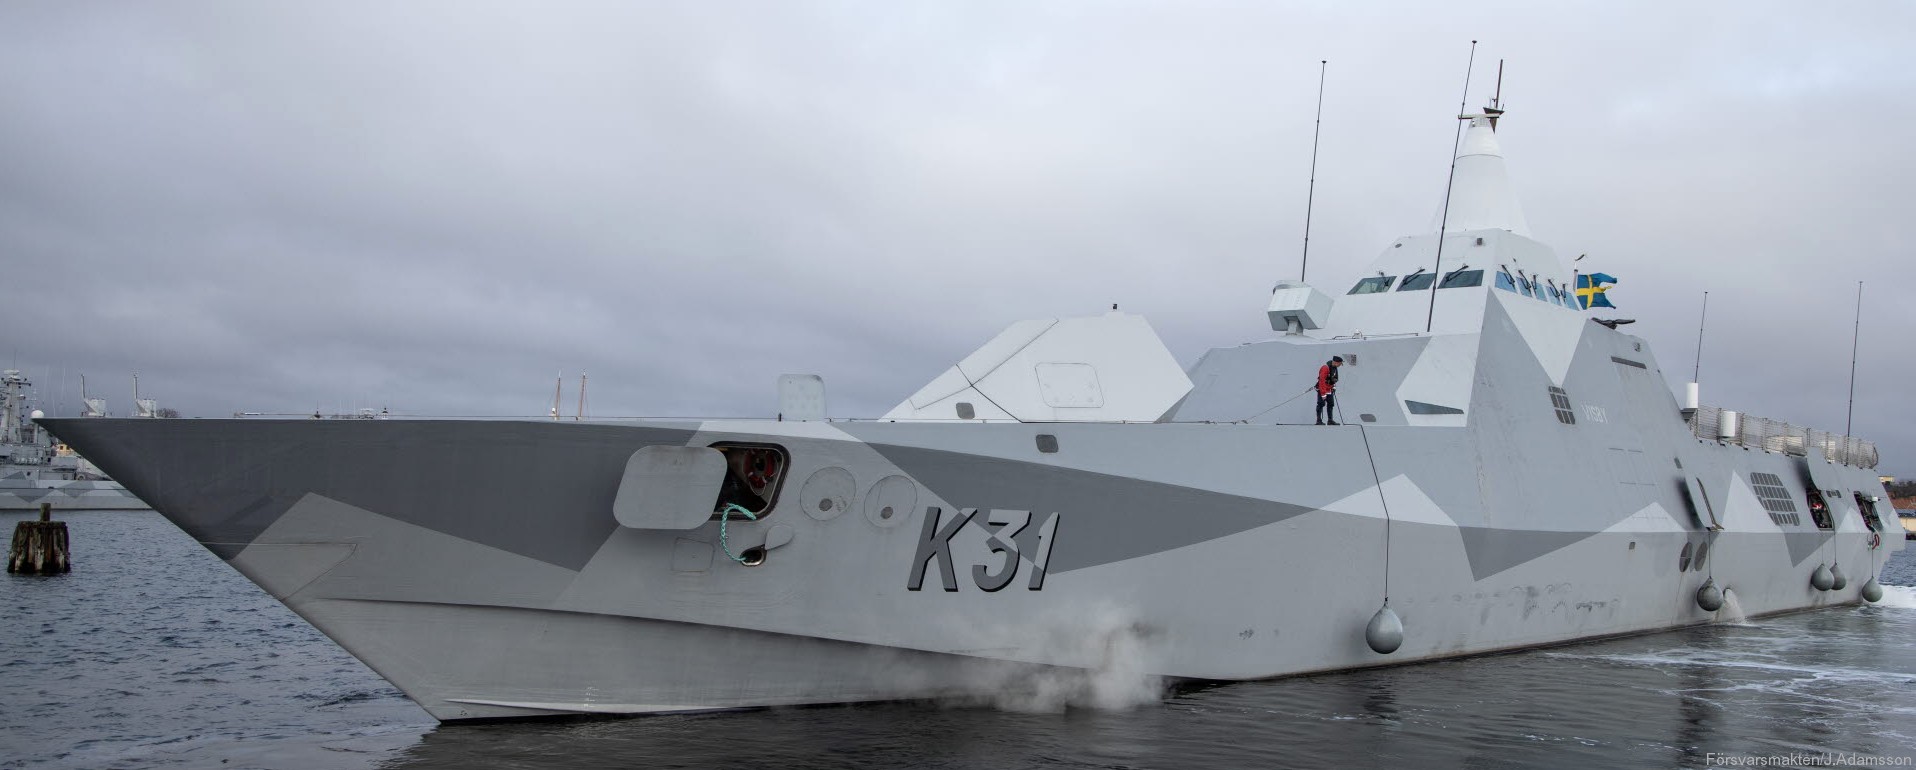 k31 hswms hms visby class corvette royal swedish navy svenska marinen 13